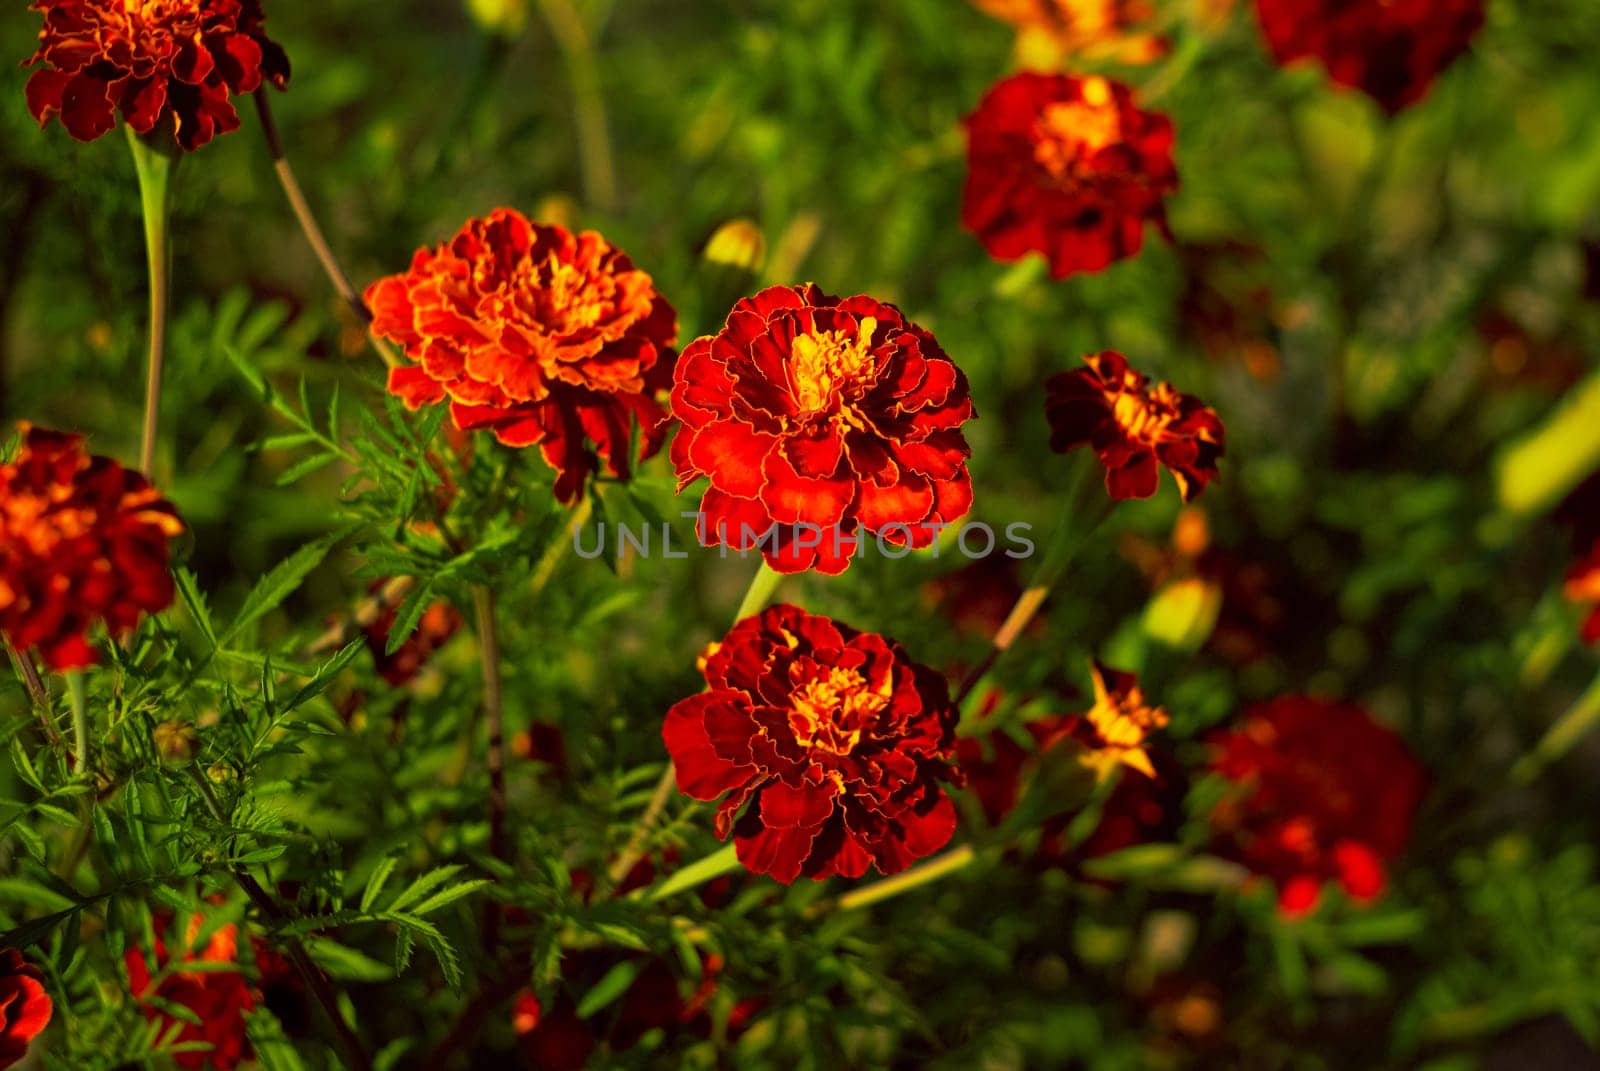 red marigold flowers on blurred background in summer garden by Севостьянов